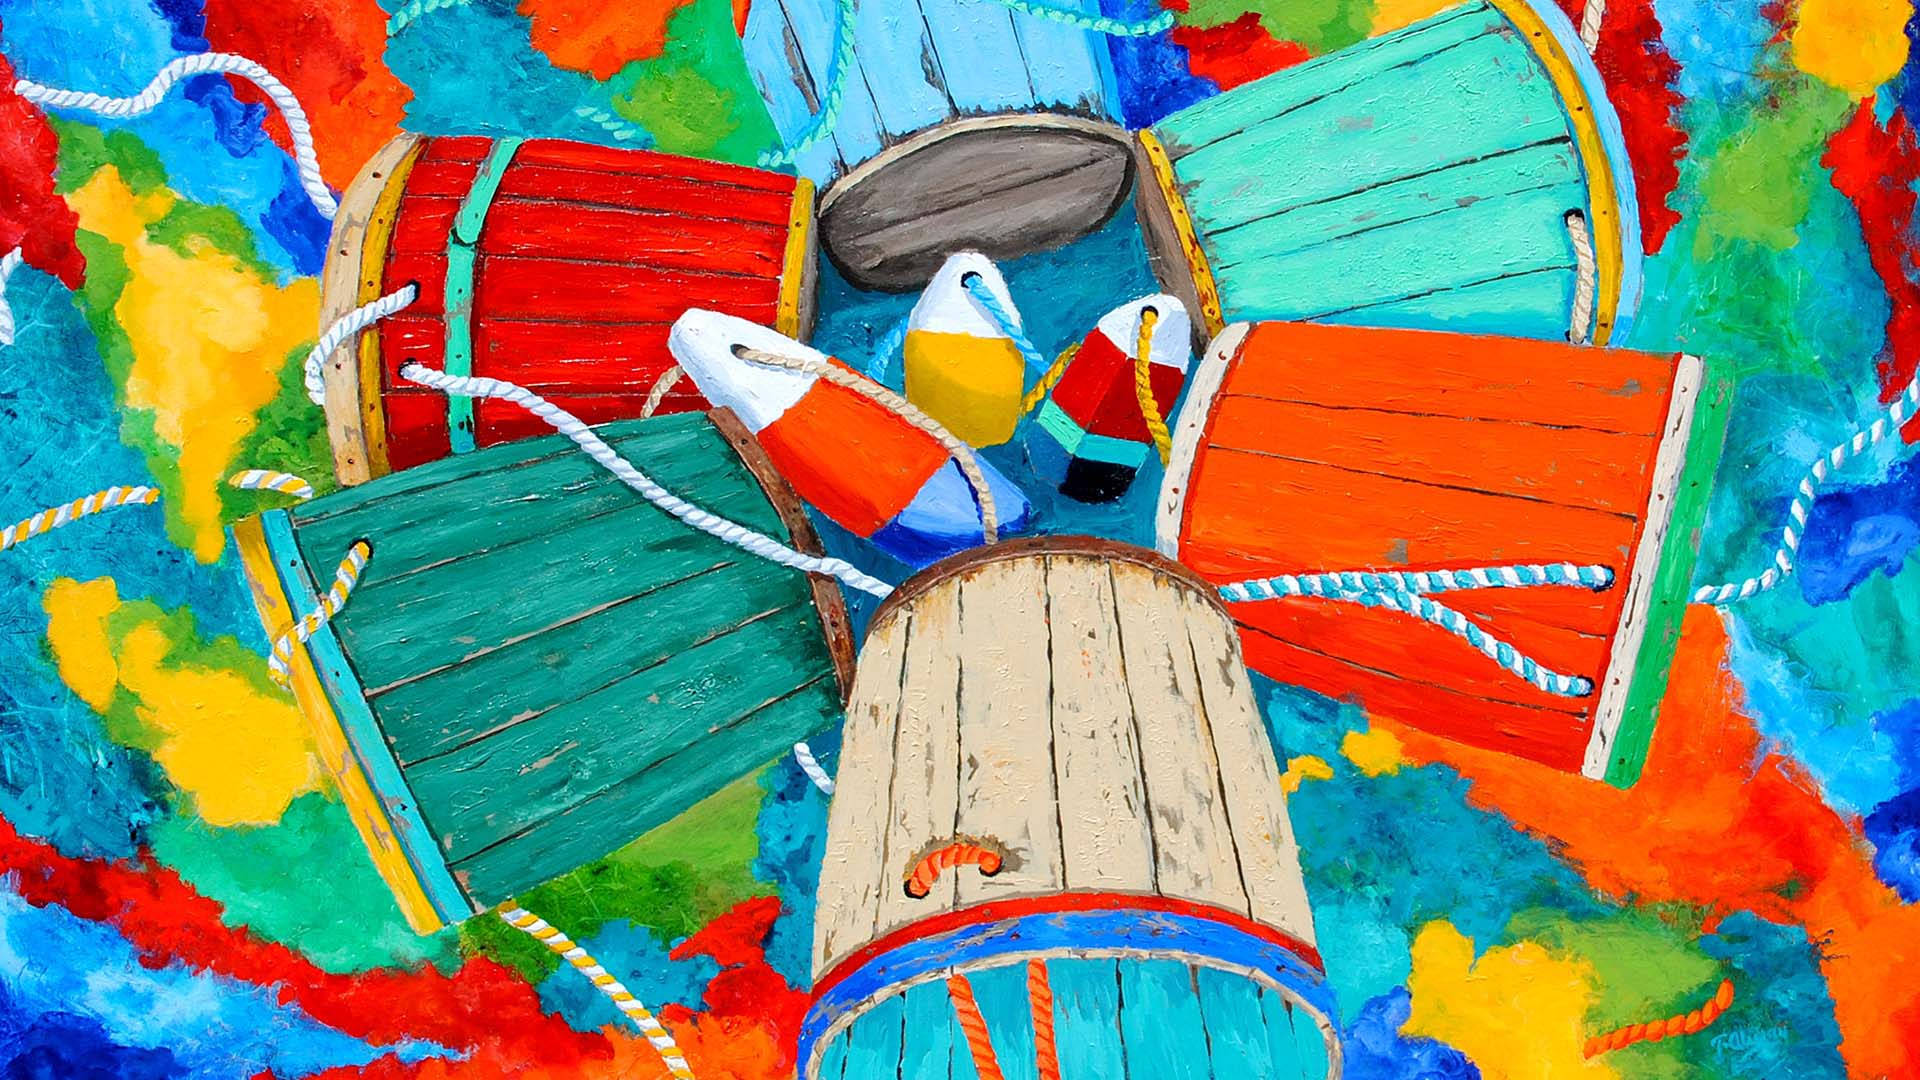 Maritime Digitally Painted Inspired Folk Art Background